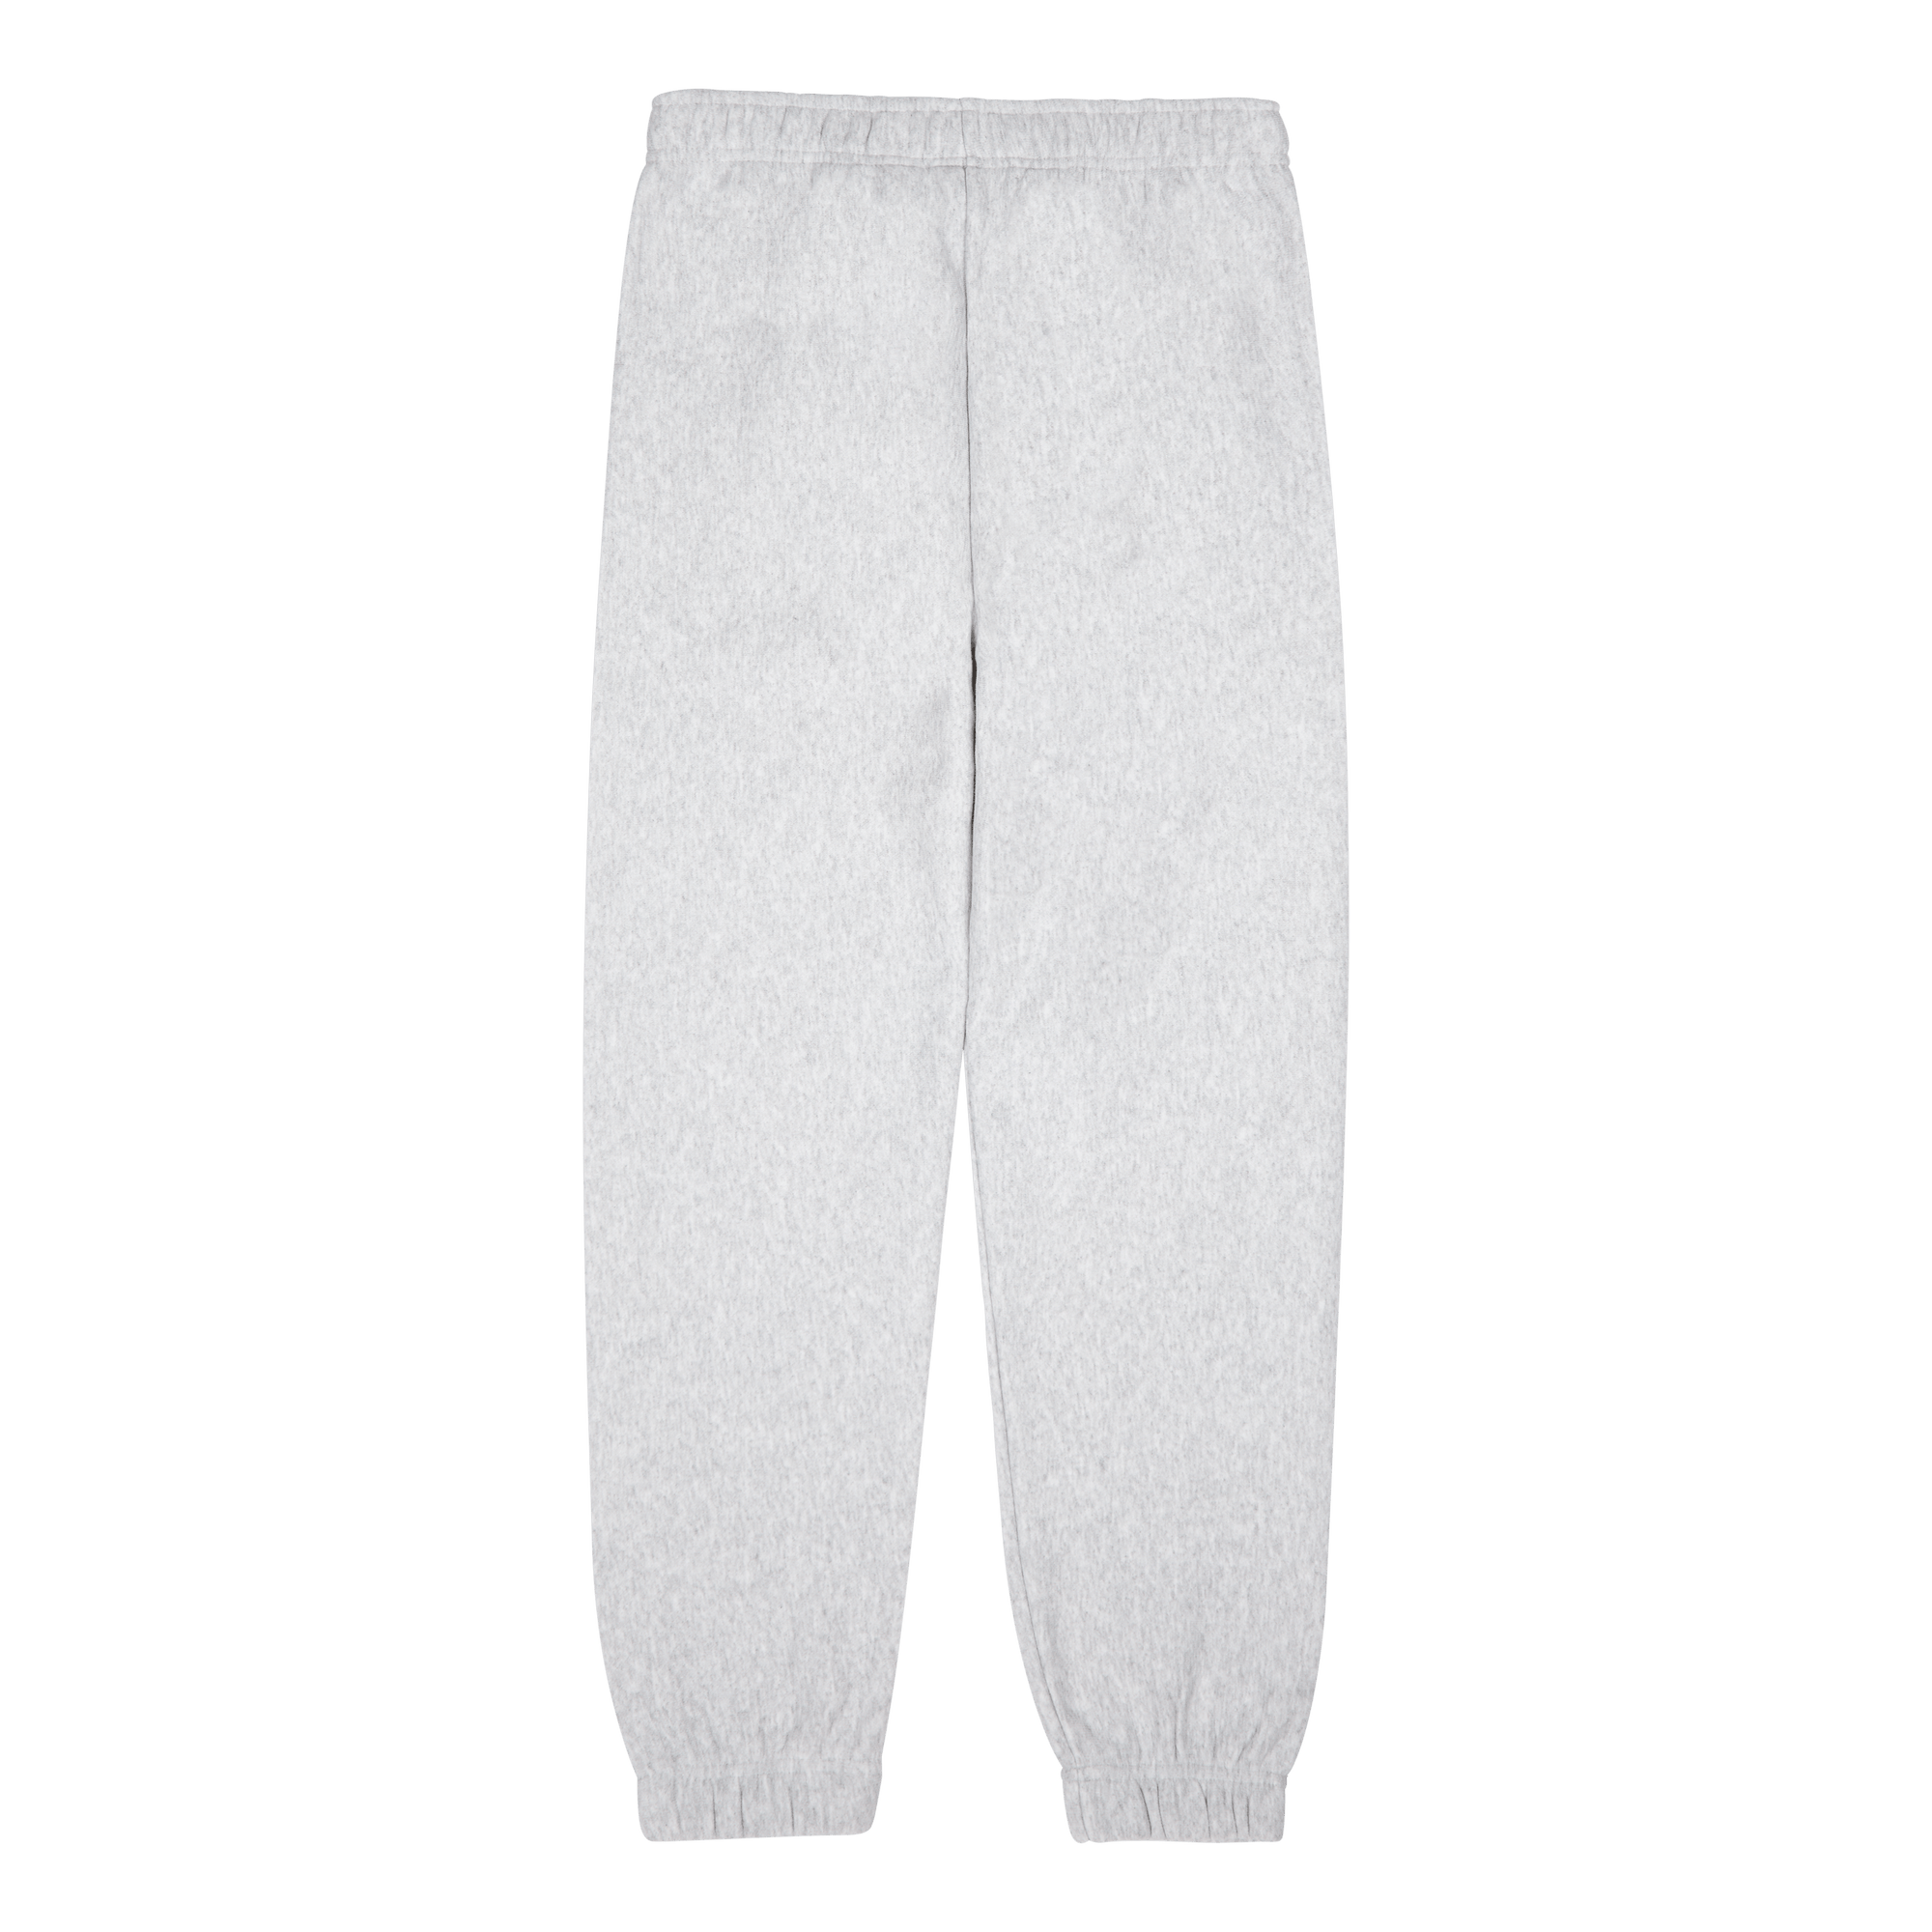 Elastic Cuff Pants Gray Melange Light